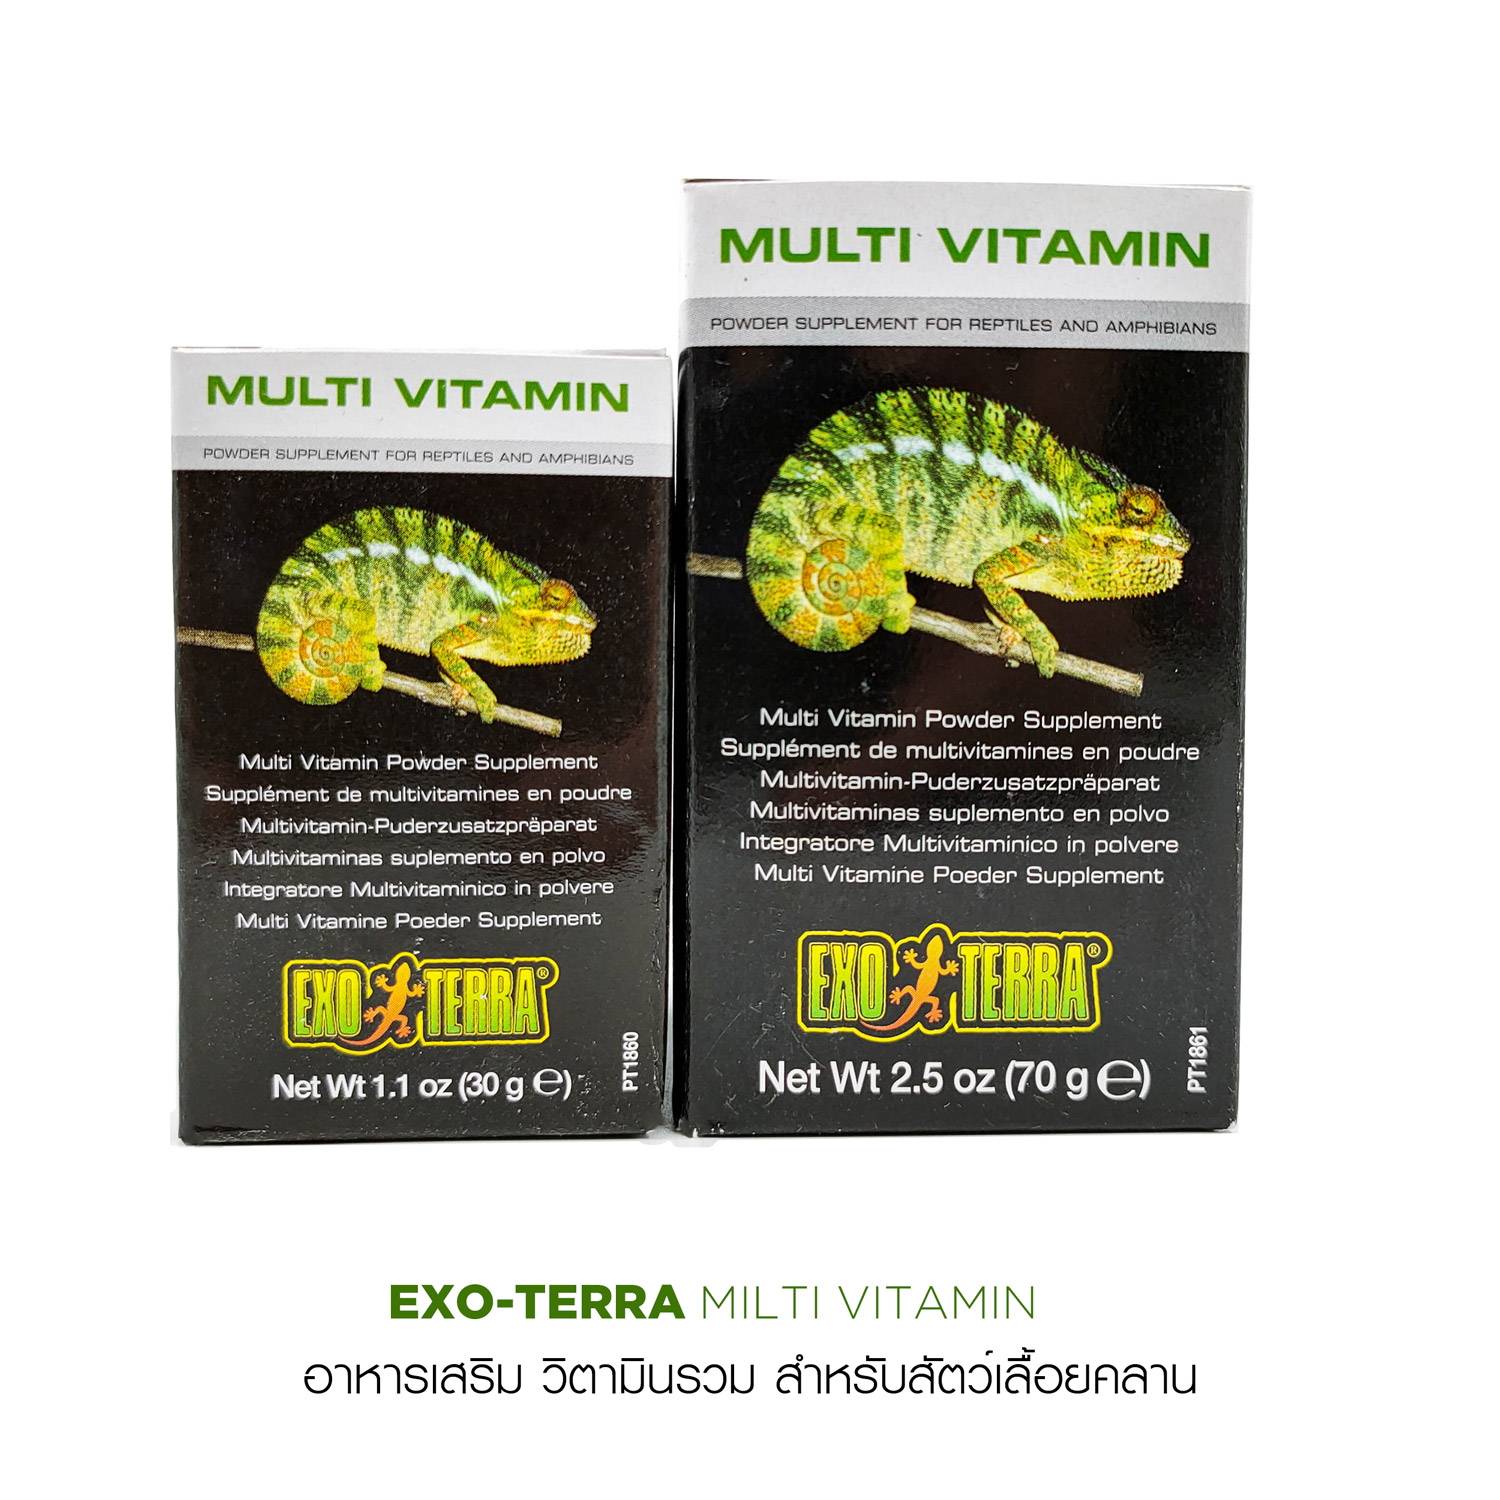 Exo Terra Multi Vitamin อาหารเสริม วิตามินรวม สำหรับสัตว์เลื้อนคลานและสัตว์ครึ่งบกครึ่งน้ำ  (30g, 70g)